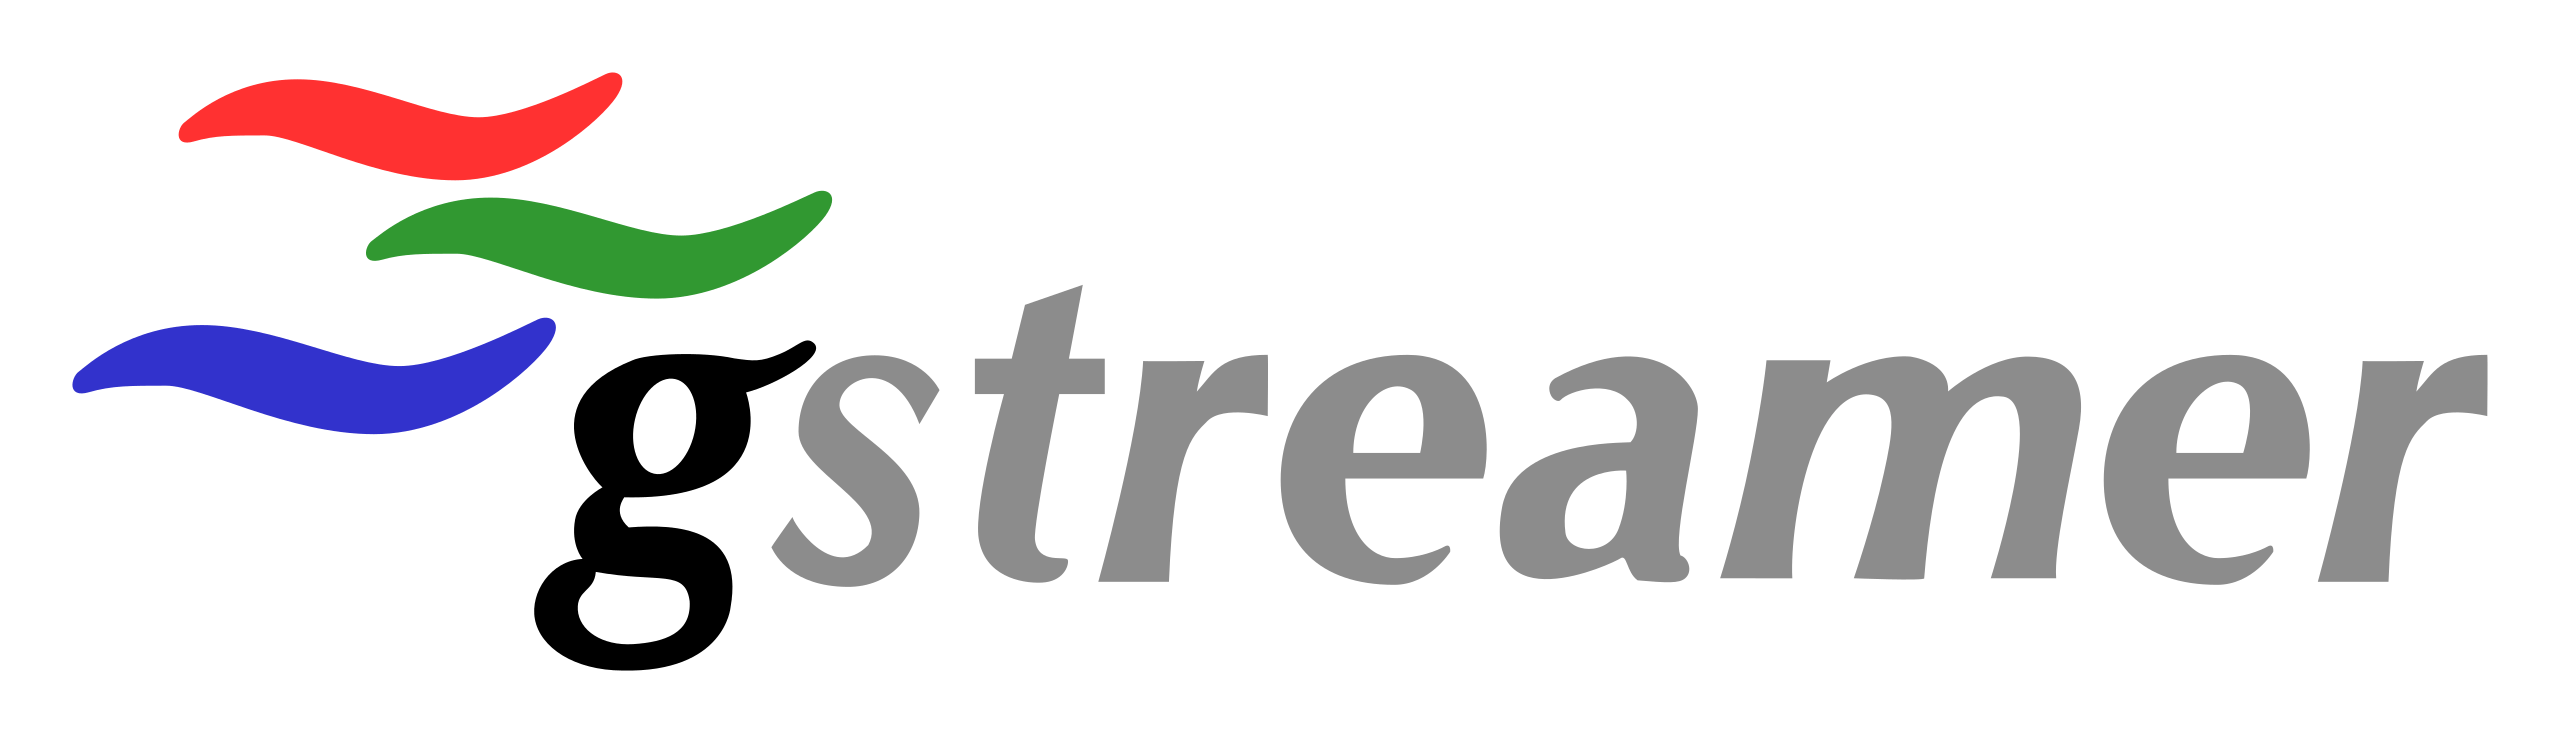 GStreamer logo - Lemberg Solutions